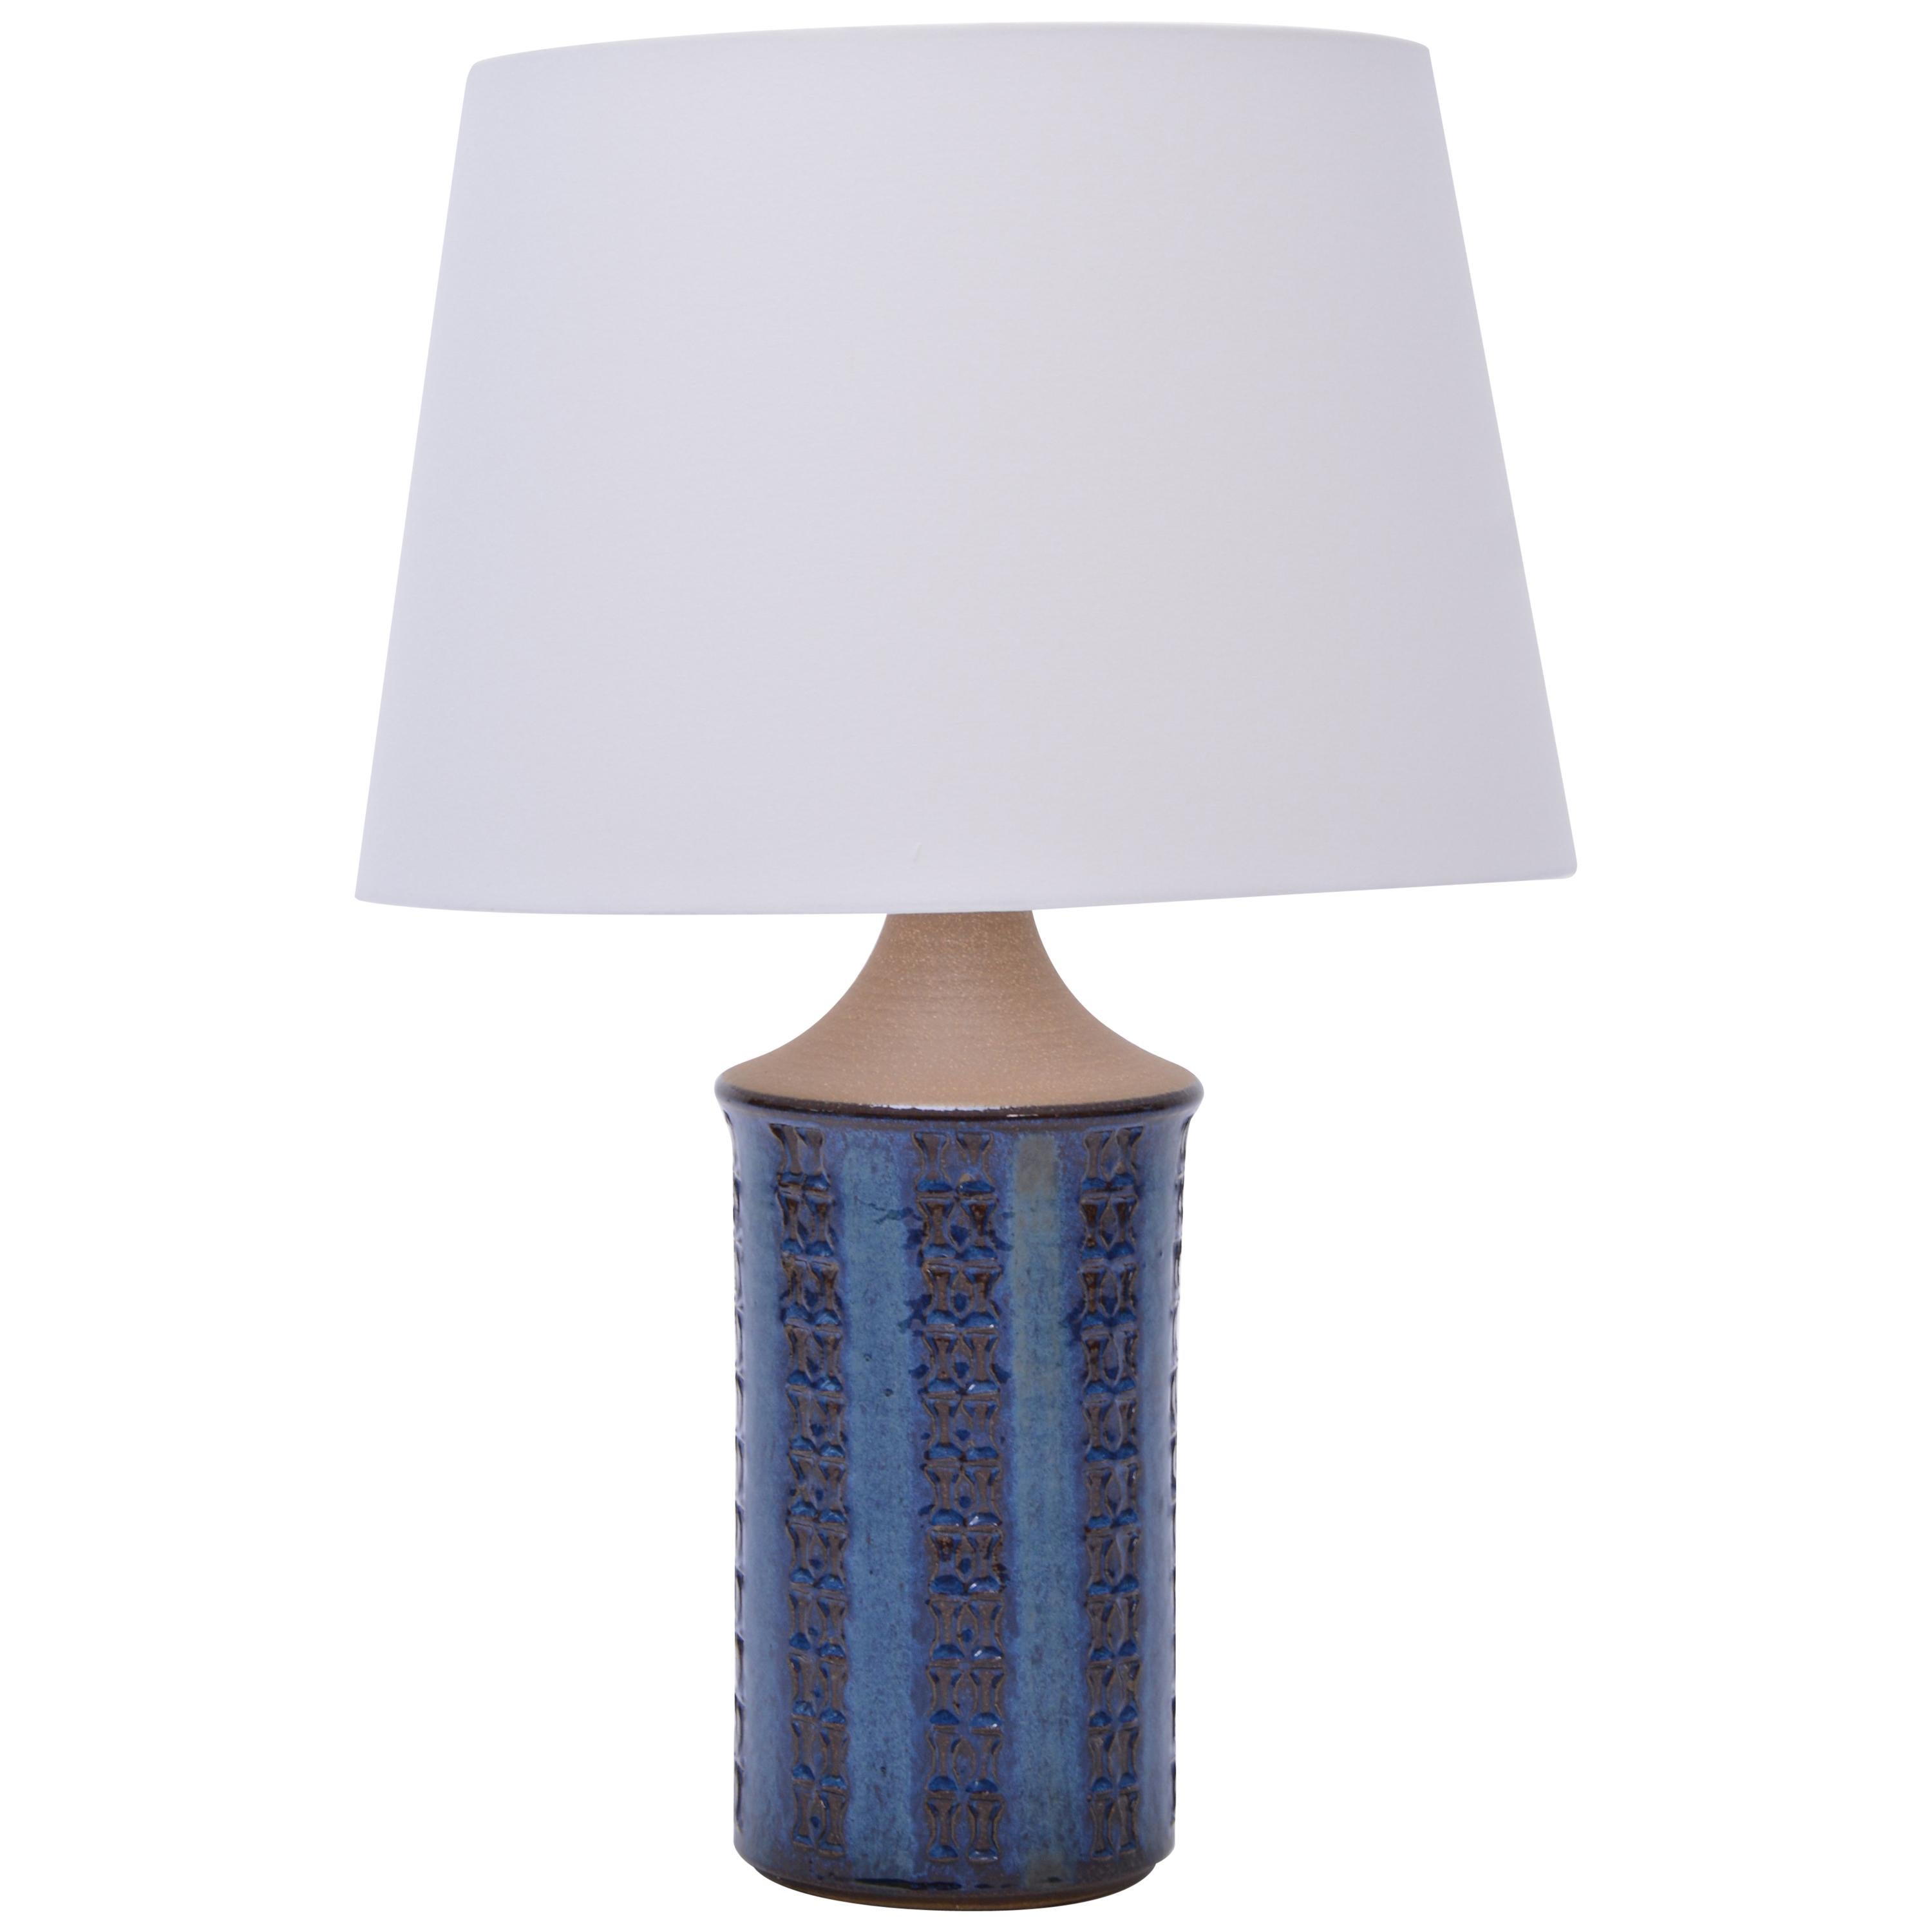 Tall Blue Vintage Table Lamp Model 3047 by Soholm Stentoj